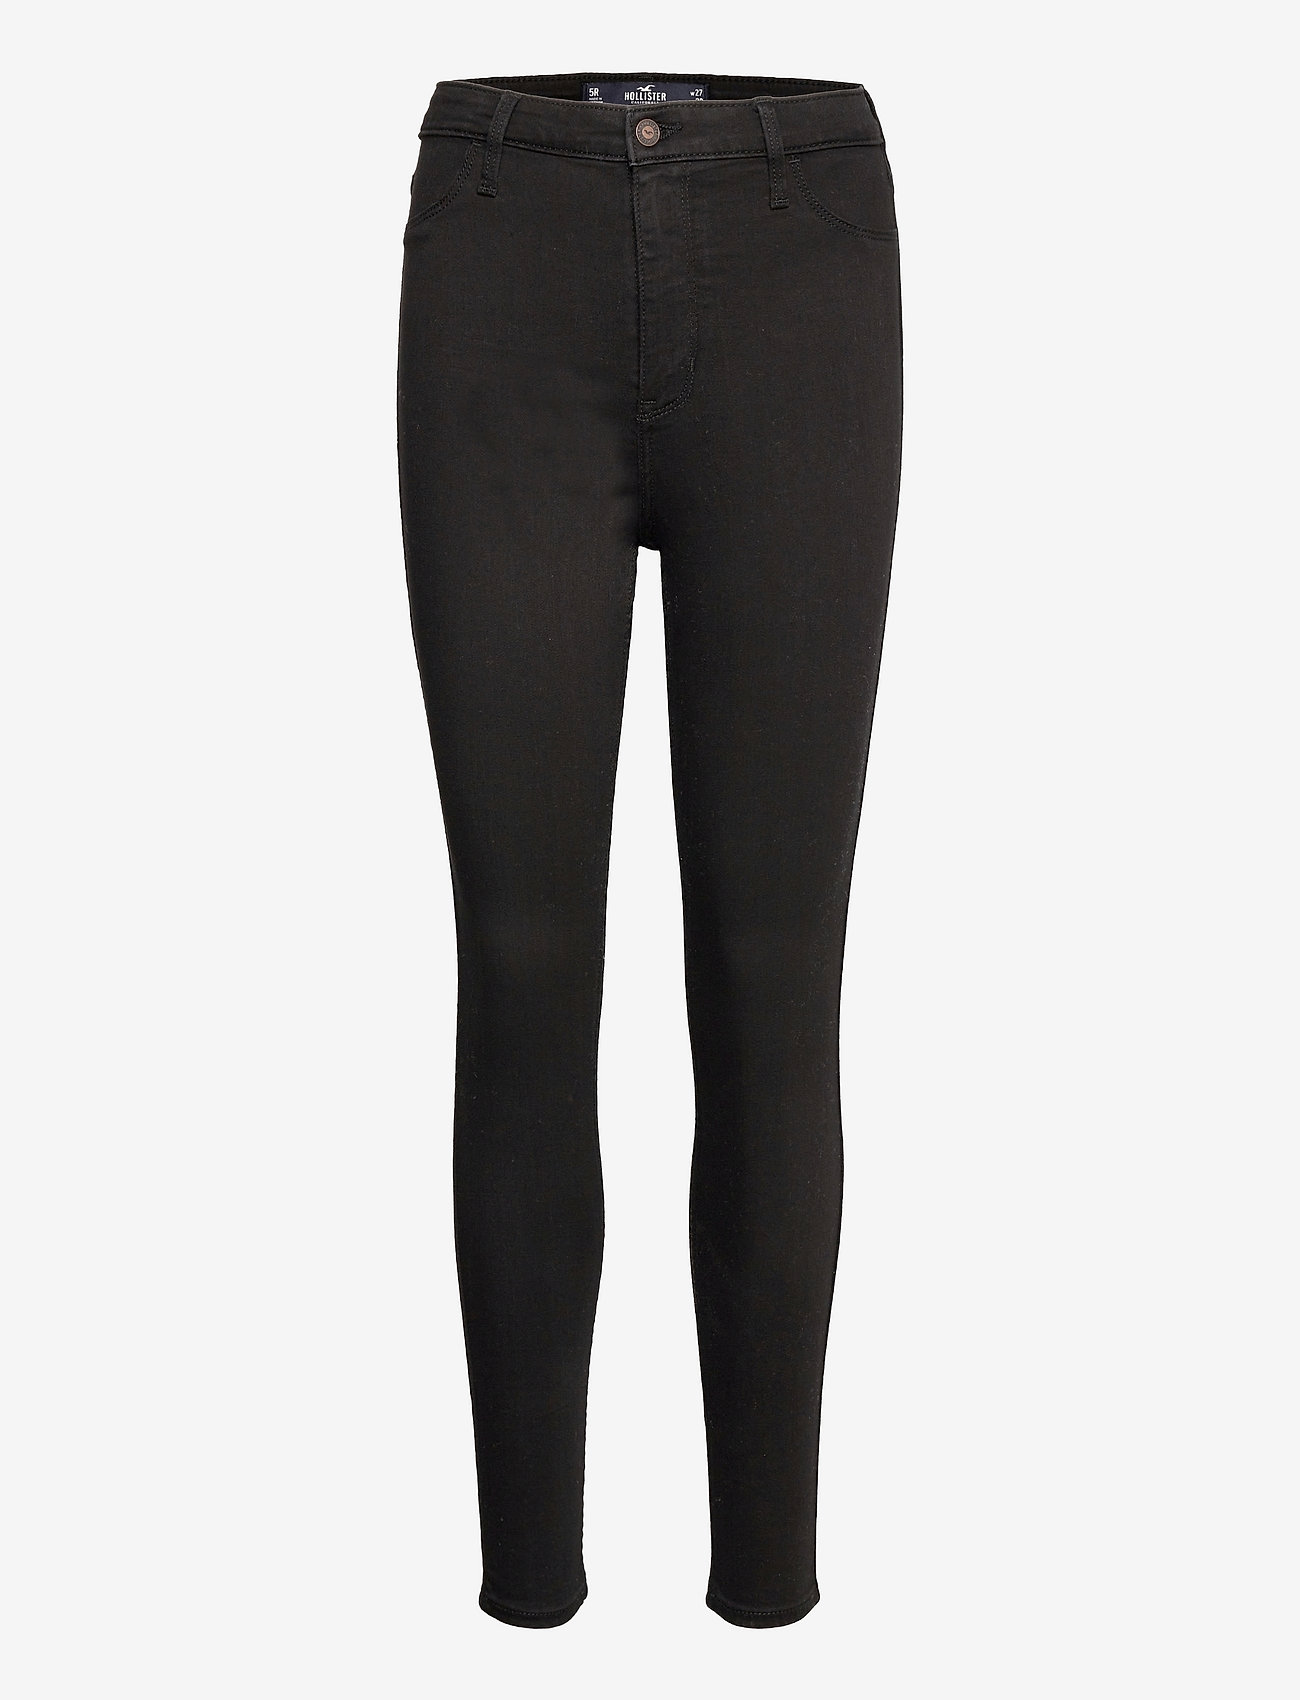 Hollister - HCo. GIRLS JEANS - skinny jeans - black clean ultra high rise jean legging - 0